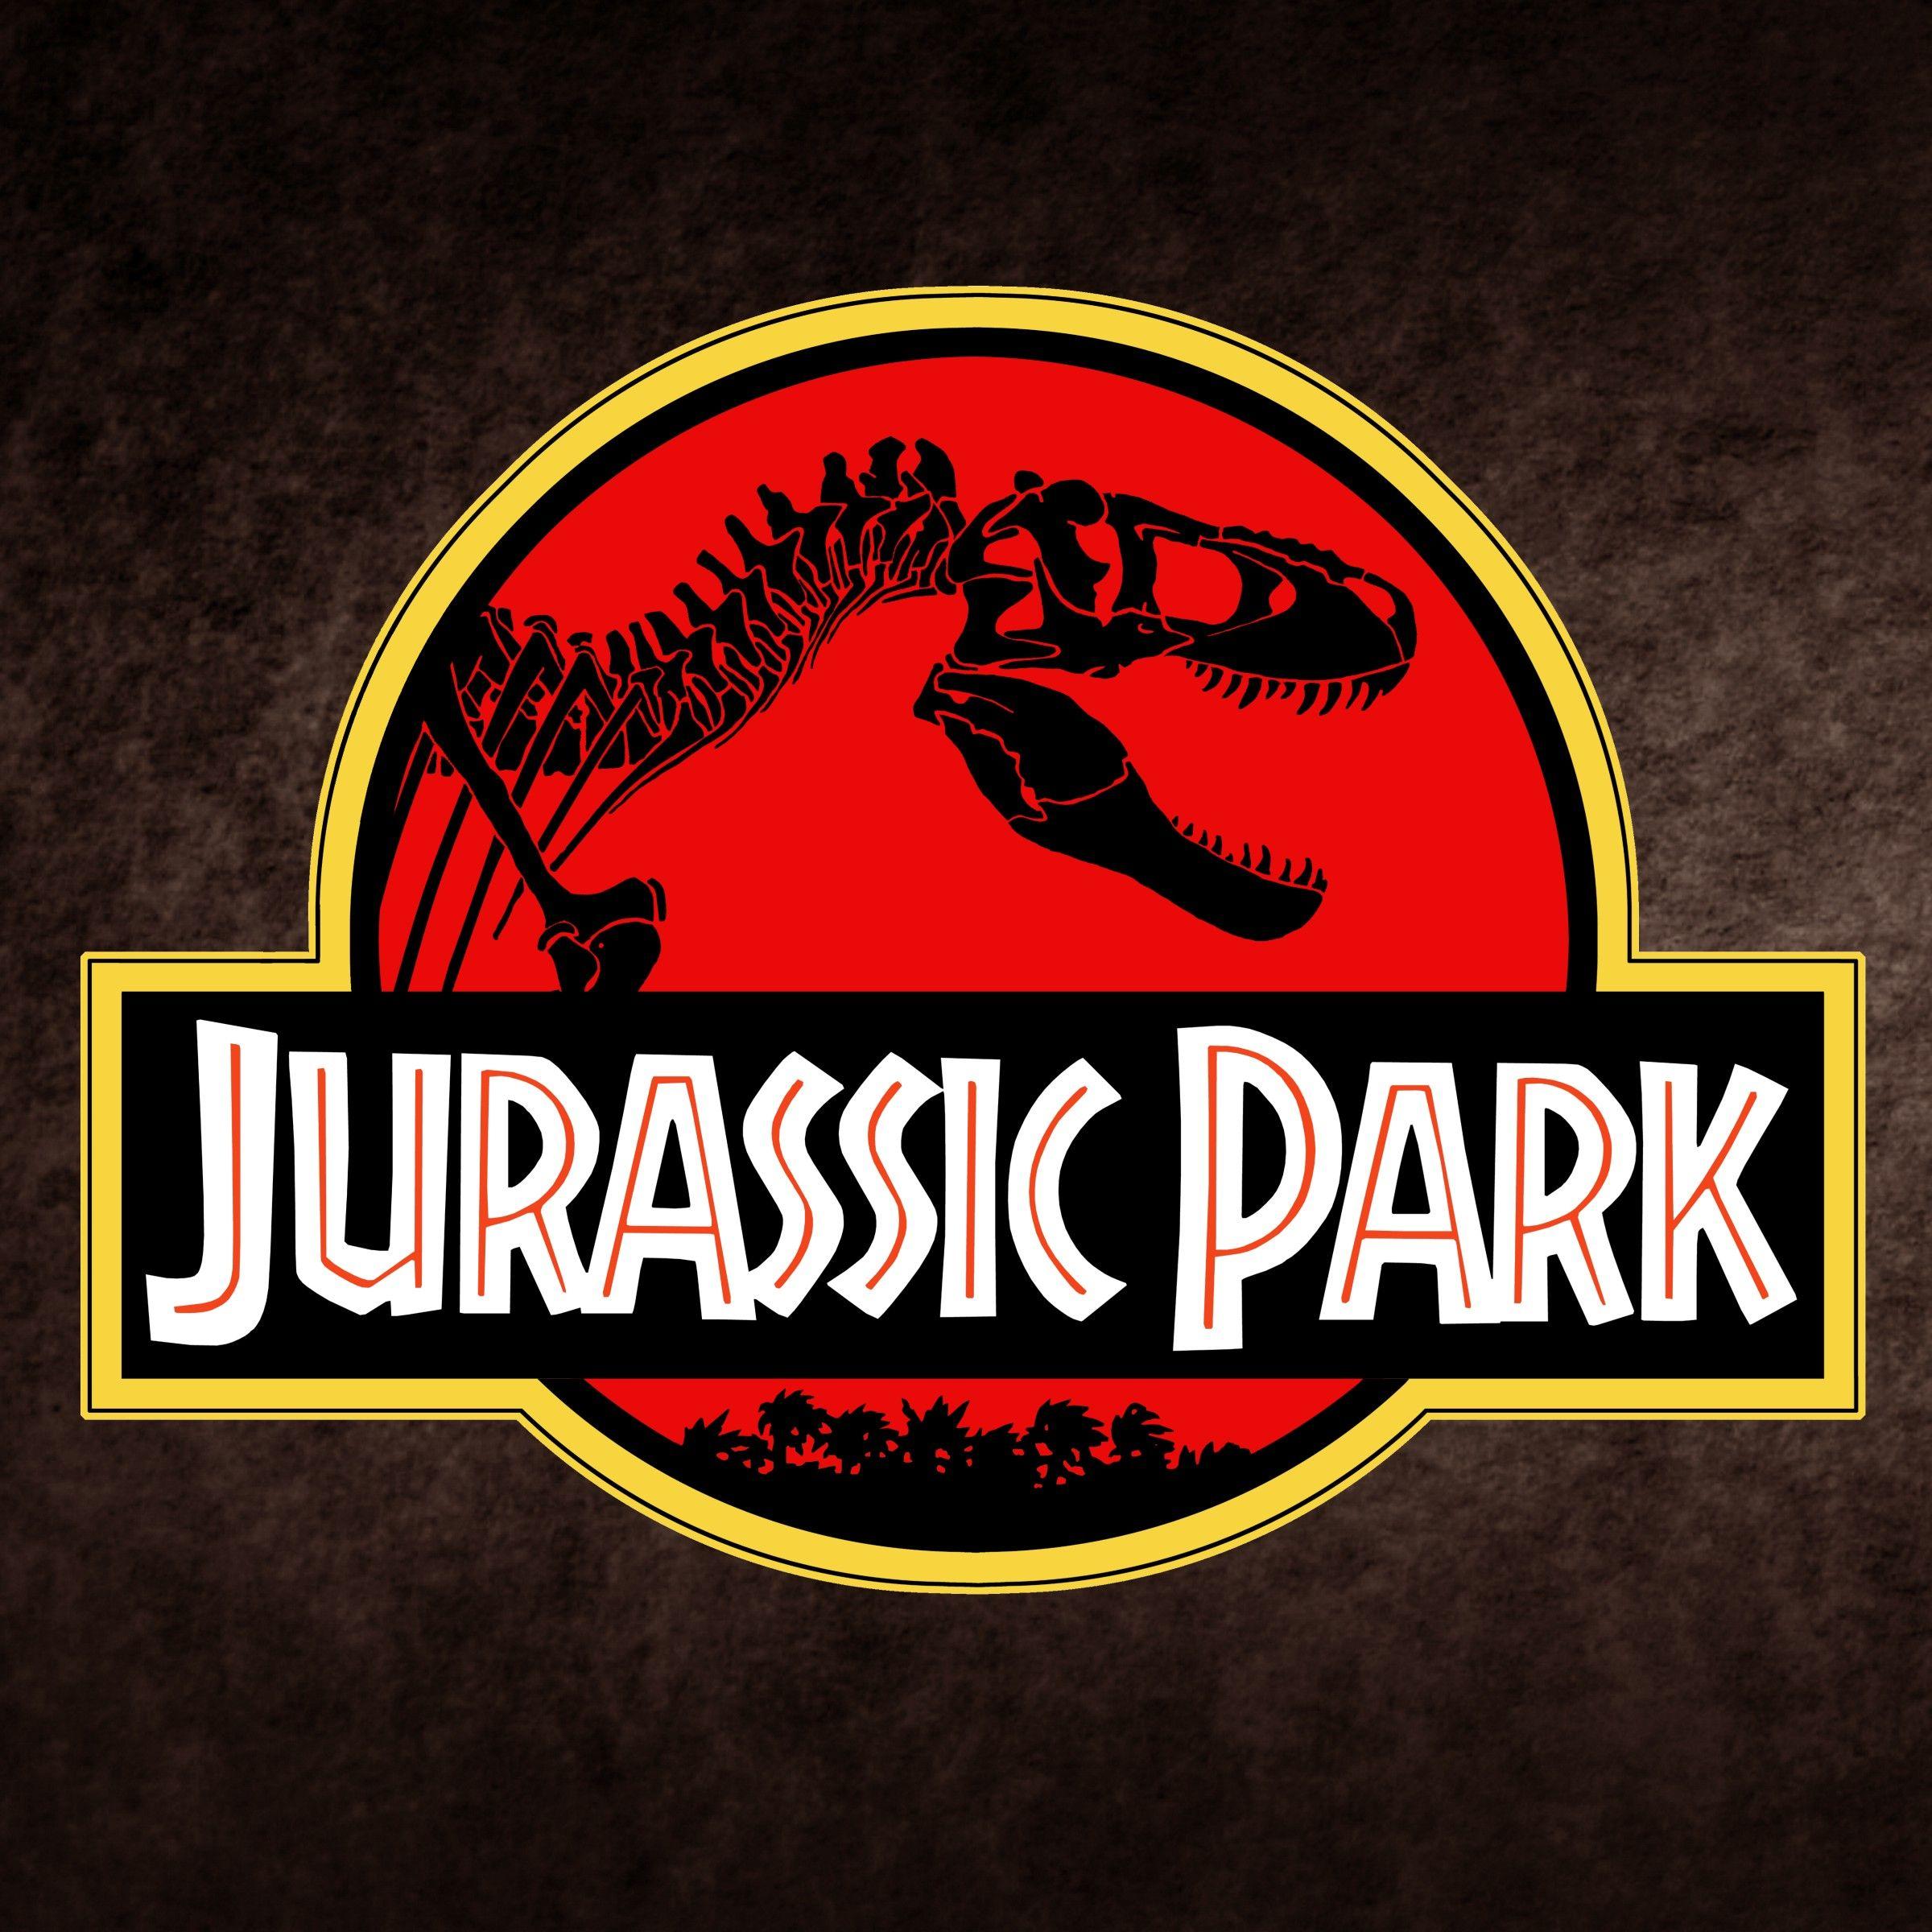 Jurassic Park Logo - Let's Talk about Jurassic Park: Part 1 – The Logo & Giraffatitan ...